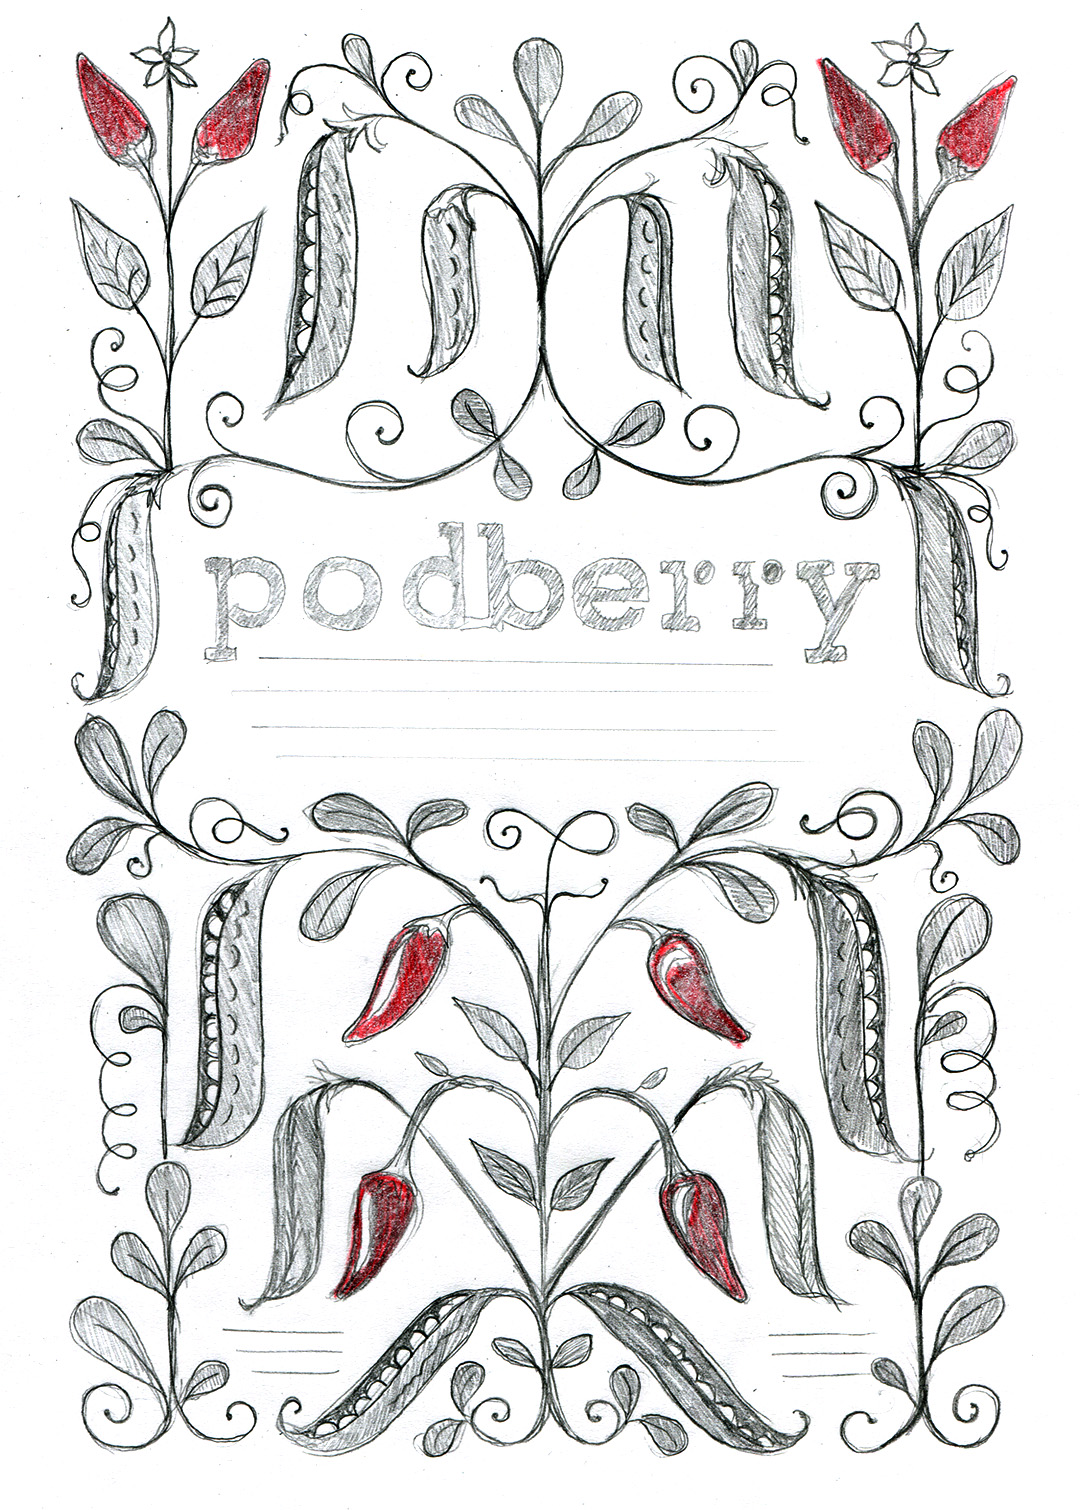 Podberry Pack Illustration Sketch Chilli | Jamie Clarke Type